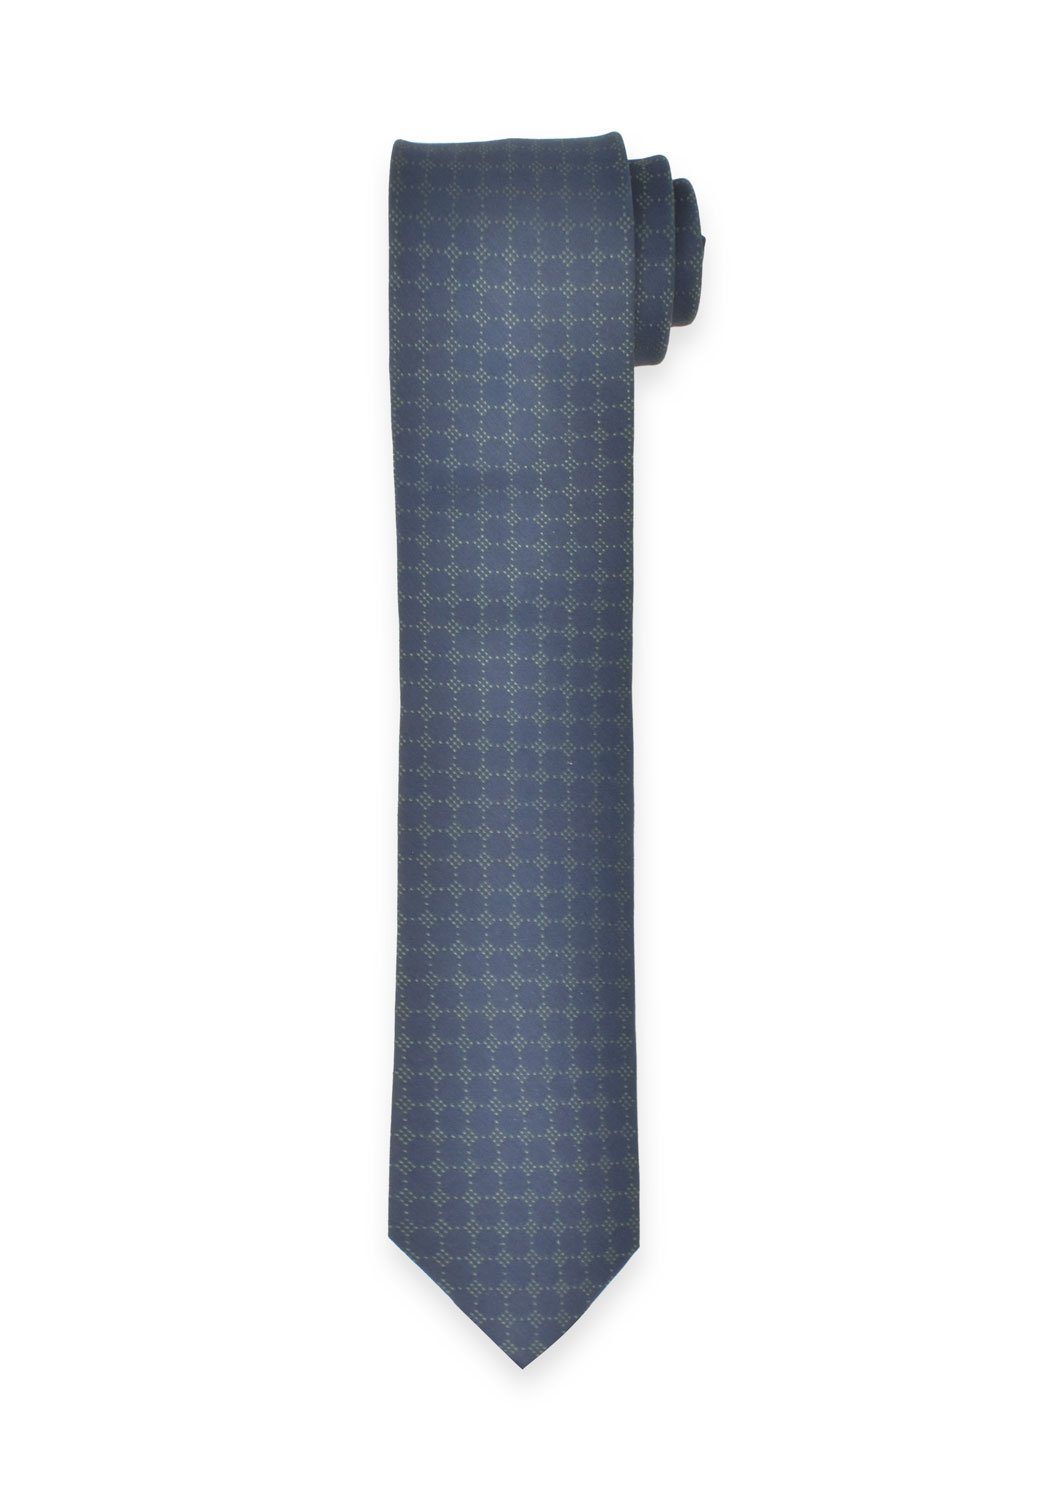 Punkte 6,5 cm - Dunkelblau/Grün - Krawatte MARVELIS Krawatte -